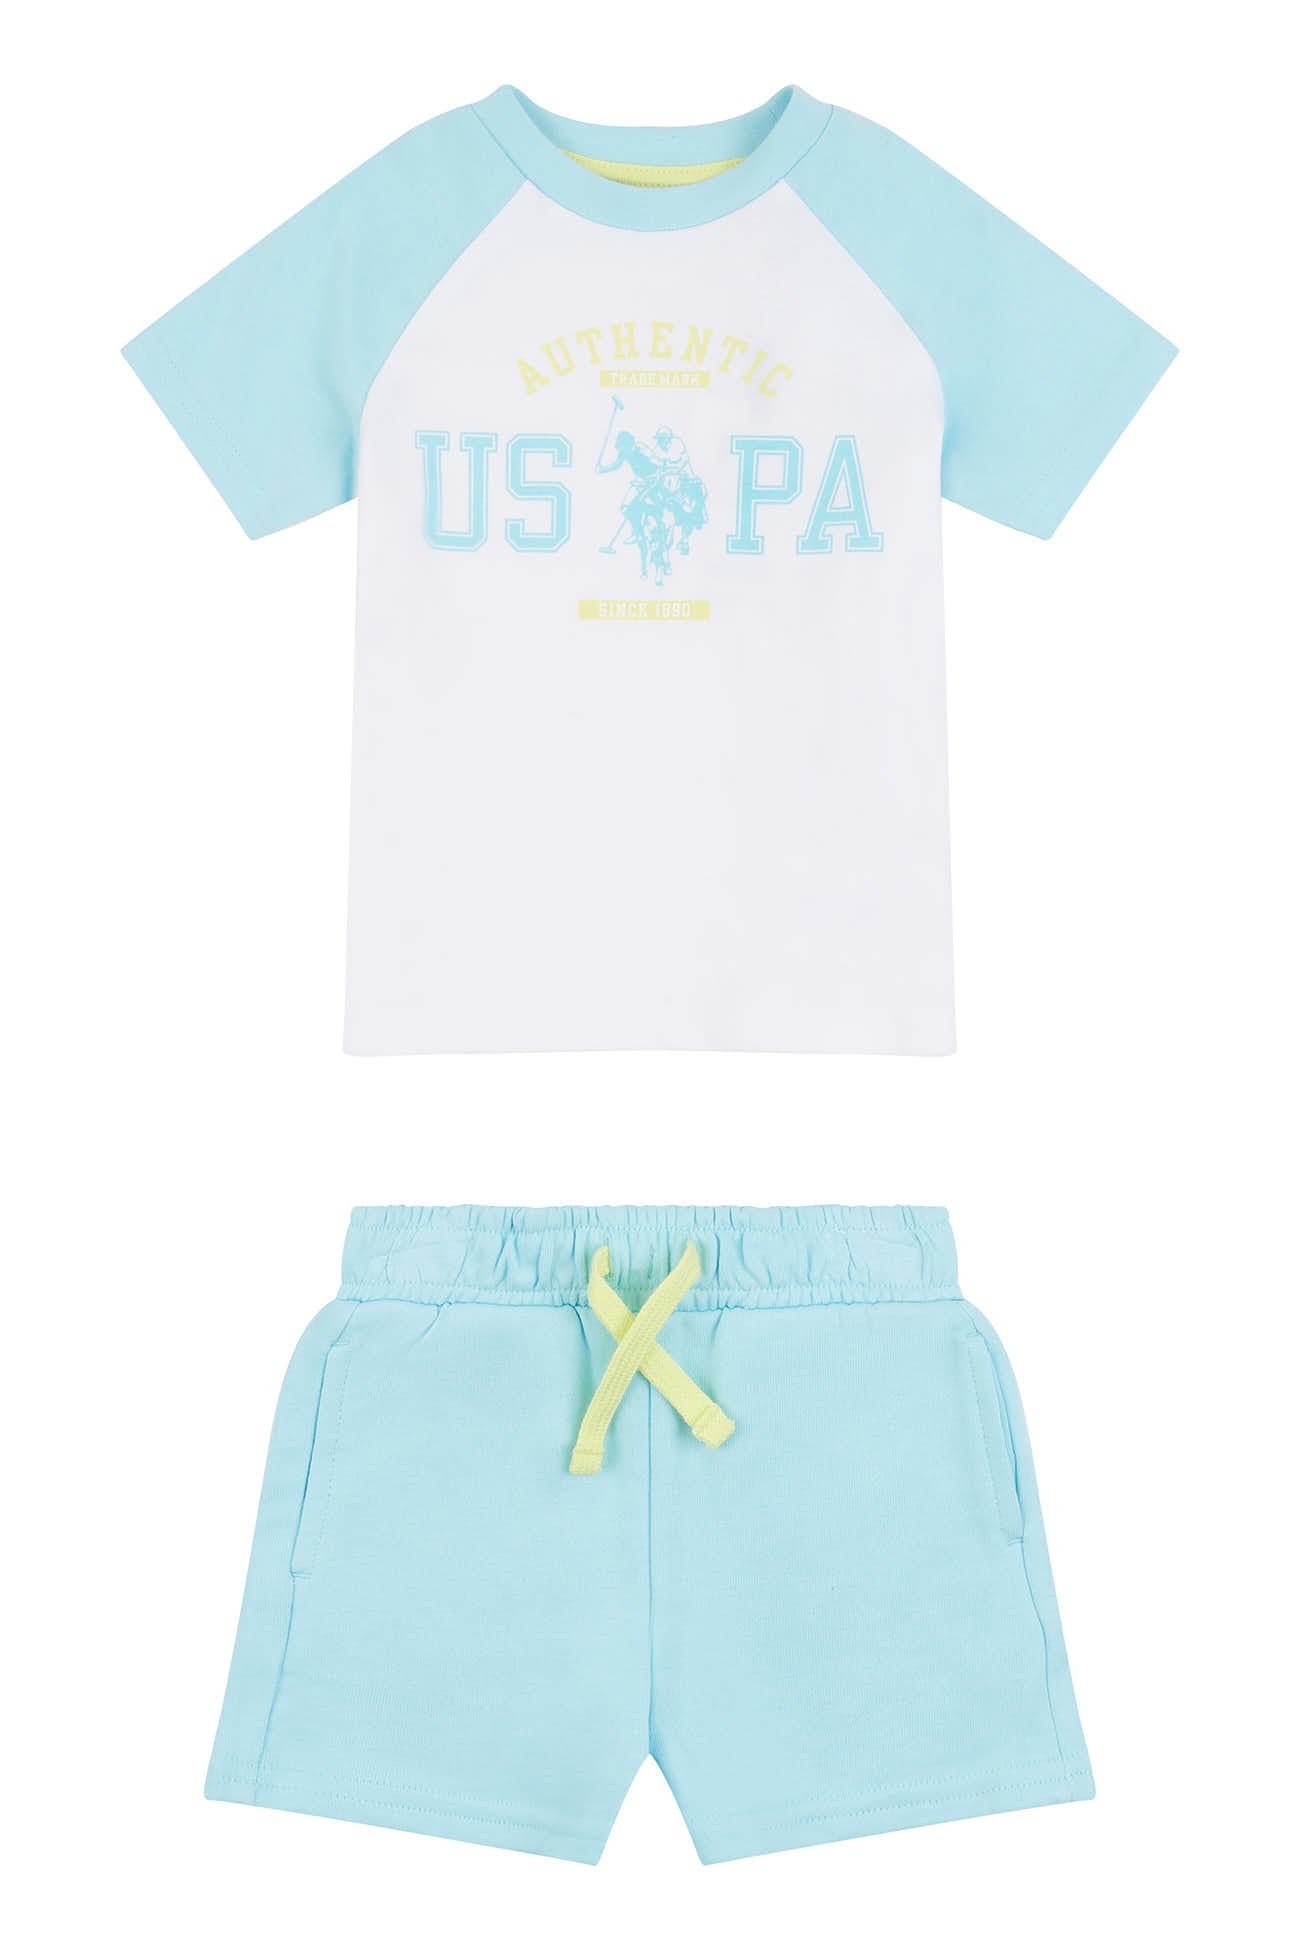 Boys Authentic USPA T-Shirt & Short Set in Bright White